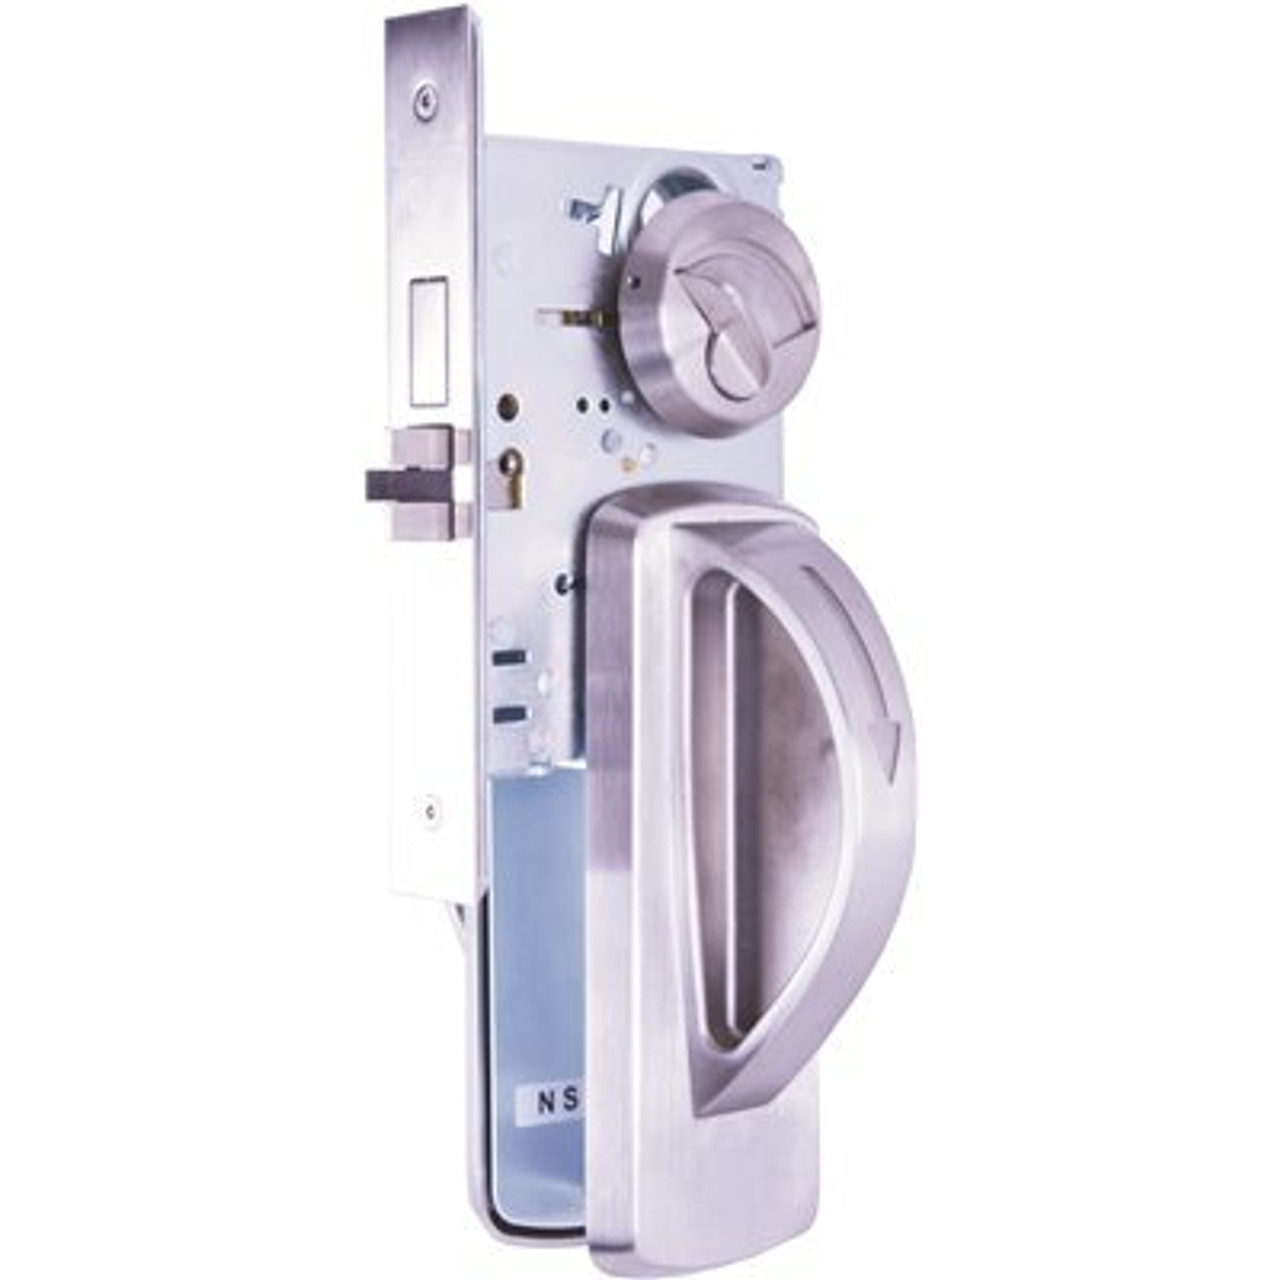 Townsteel Mrxa Series Ligature Resistant Stainless Steel Mortise Lock Arch Trim Design, Privacy - 309069035